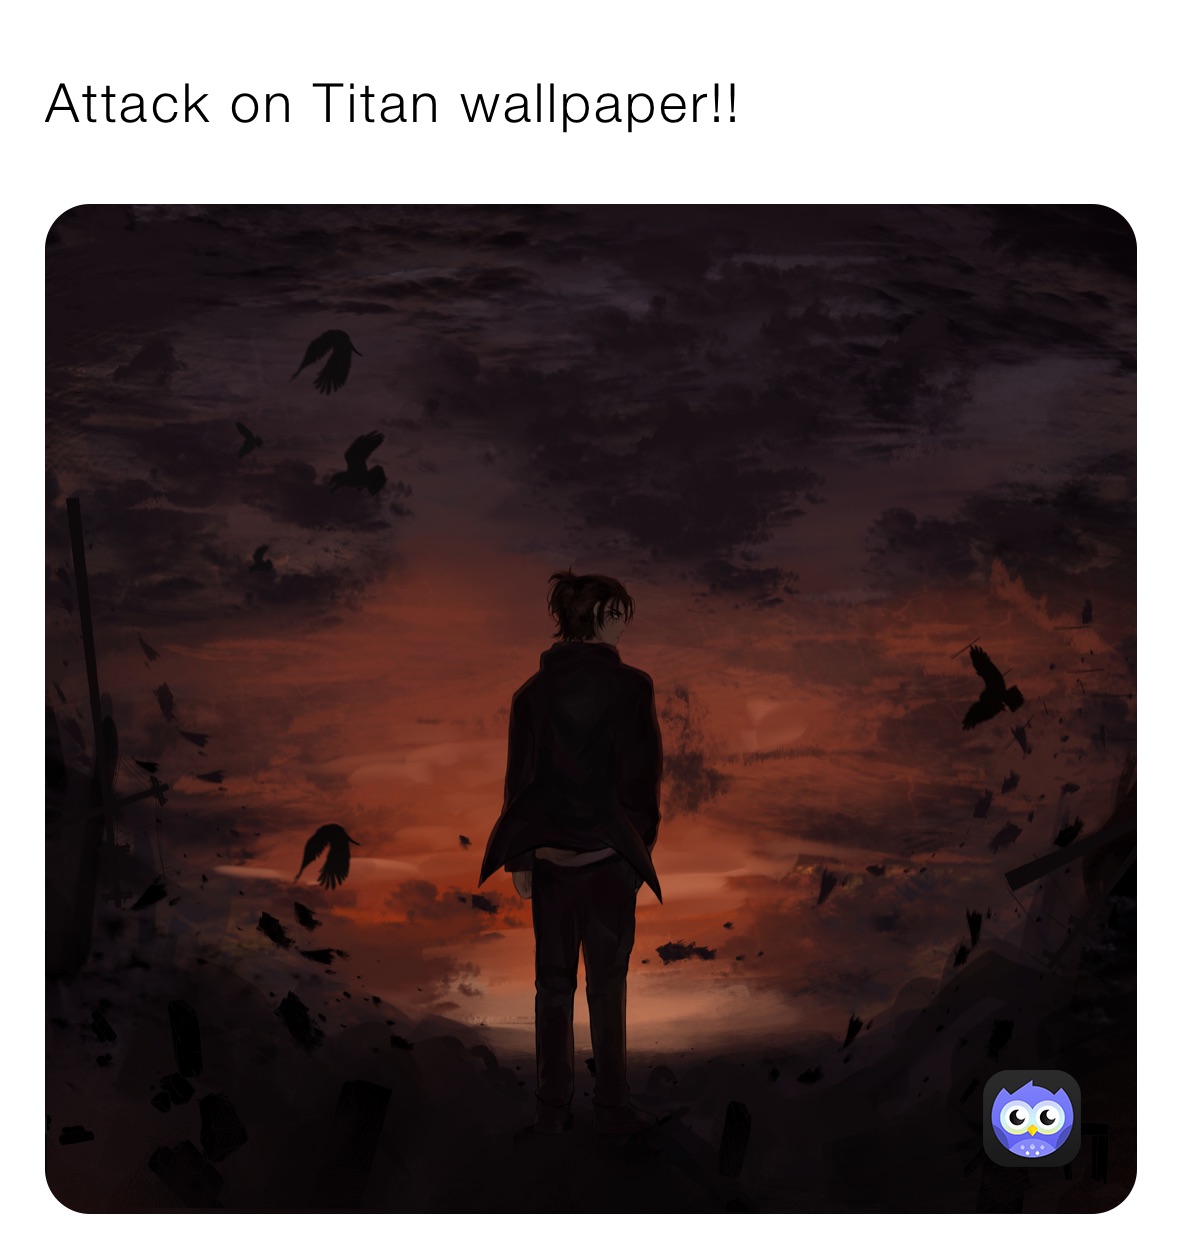 Attack on Titan wallpaper!!